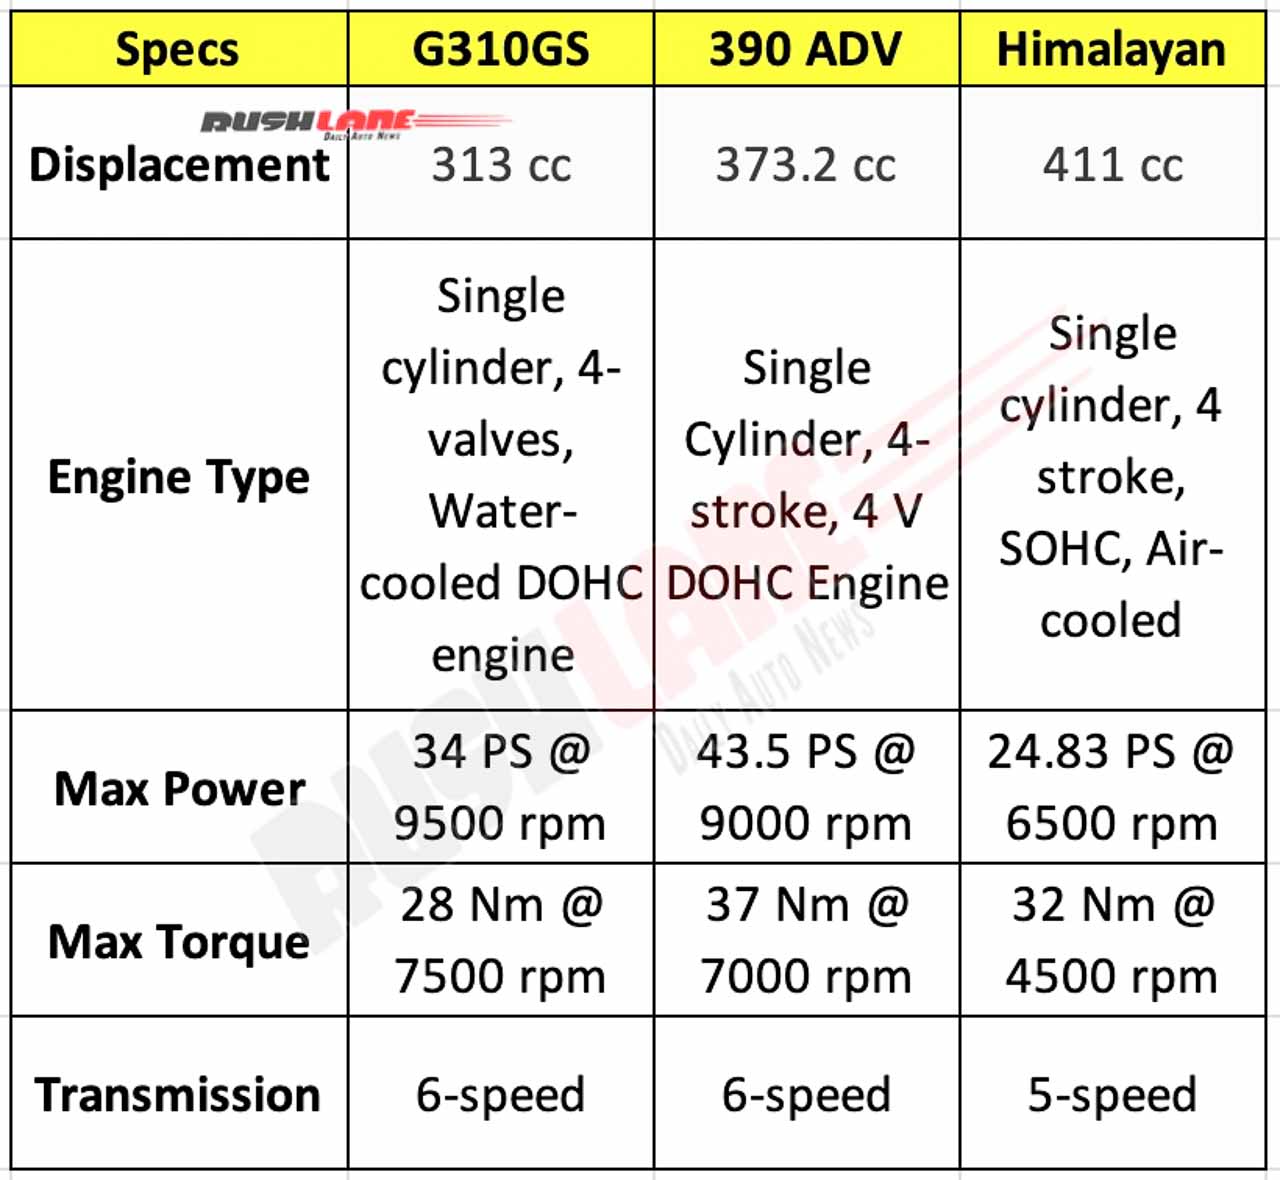 New BMW G 310 GS Vs KTM 390 ADV Vs RE Himalayan - Comparison